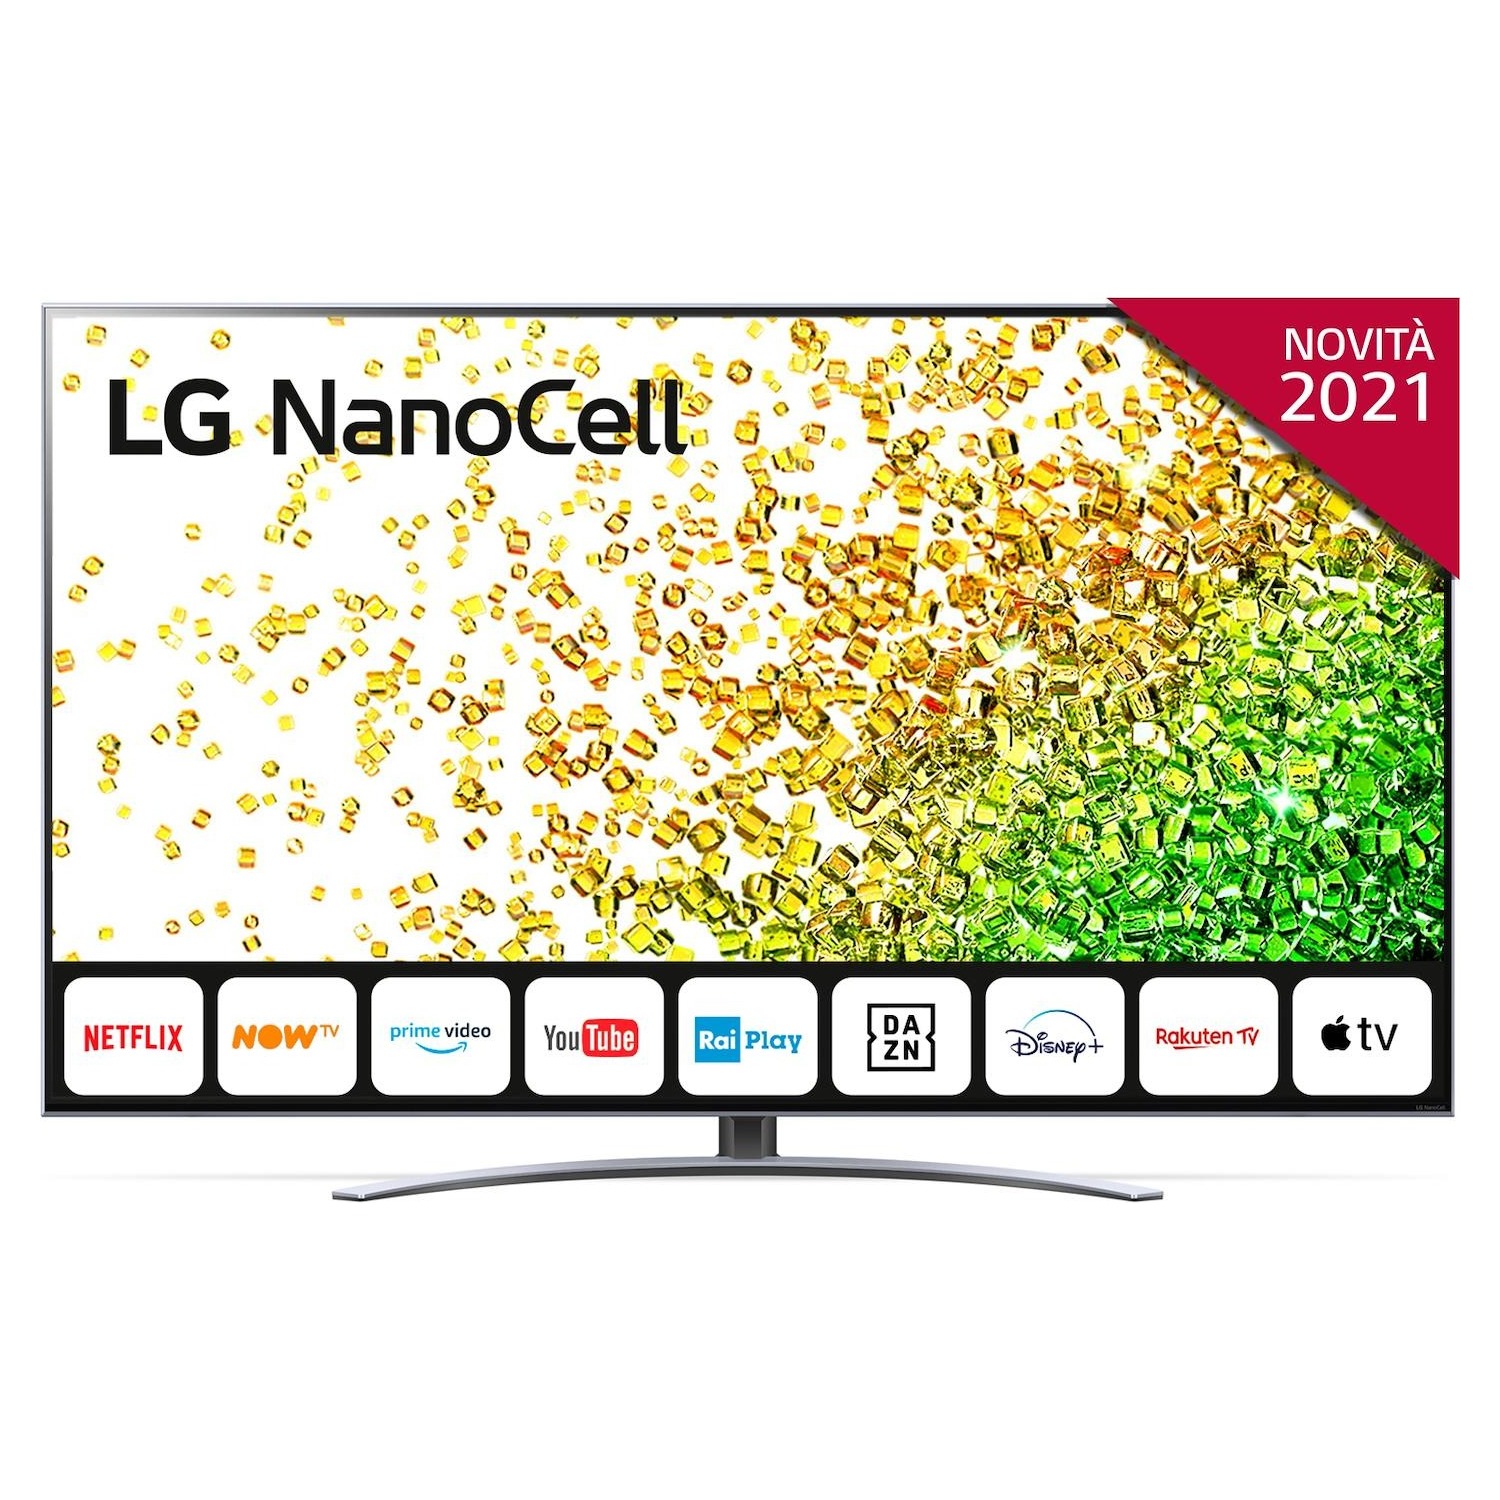 Immagine per TV LED LG 50NANO886 Calibrato 4K e FULL HD da DIMOStore